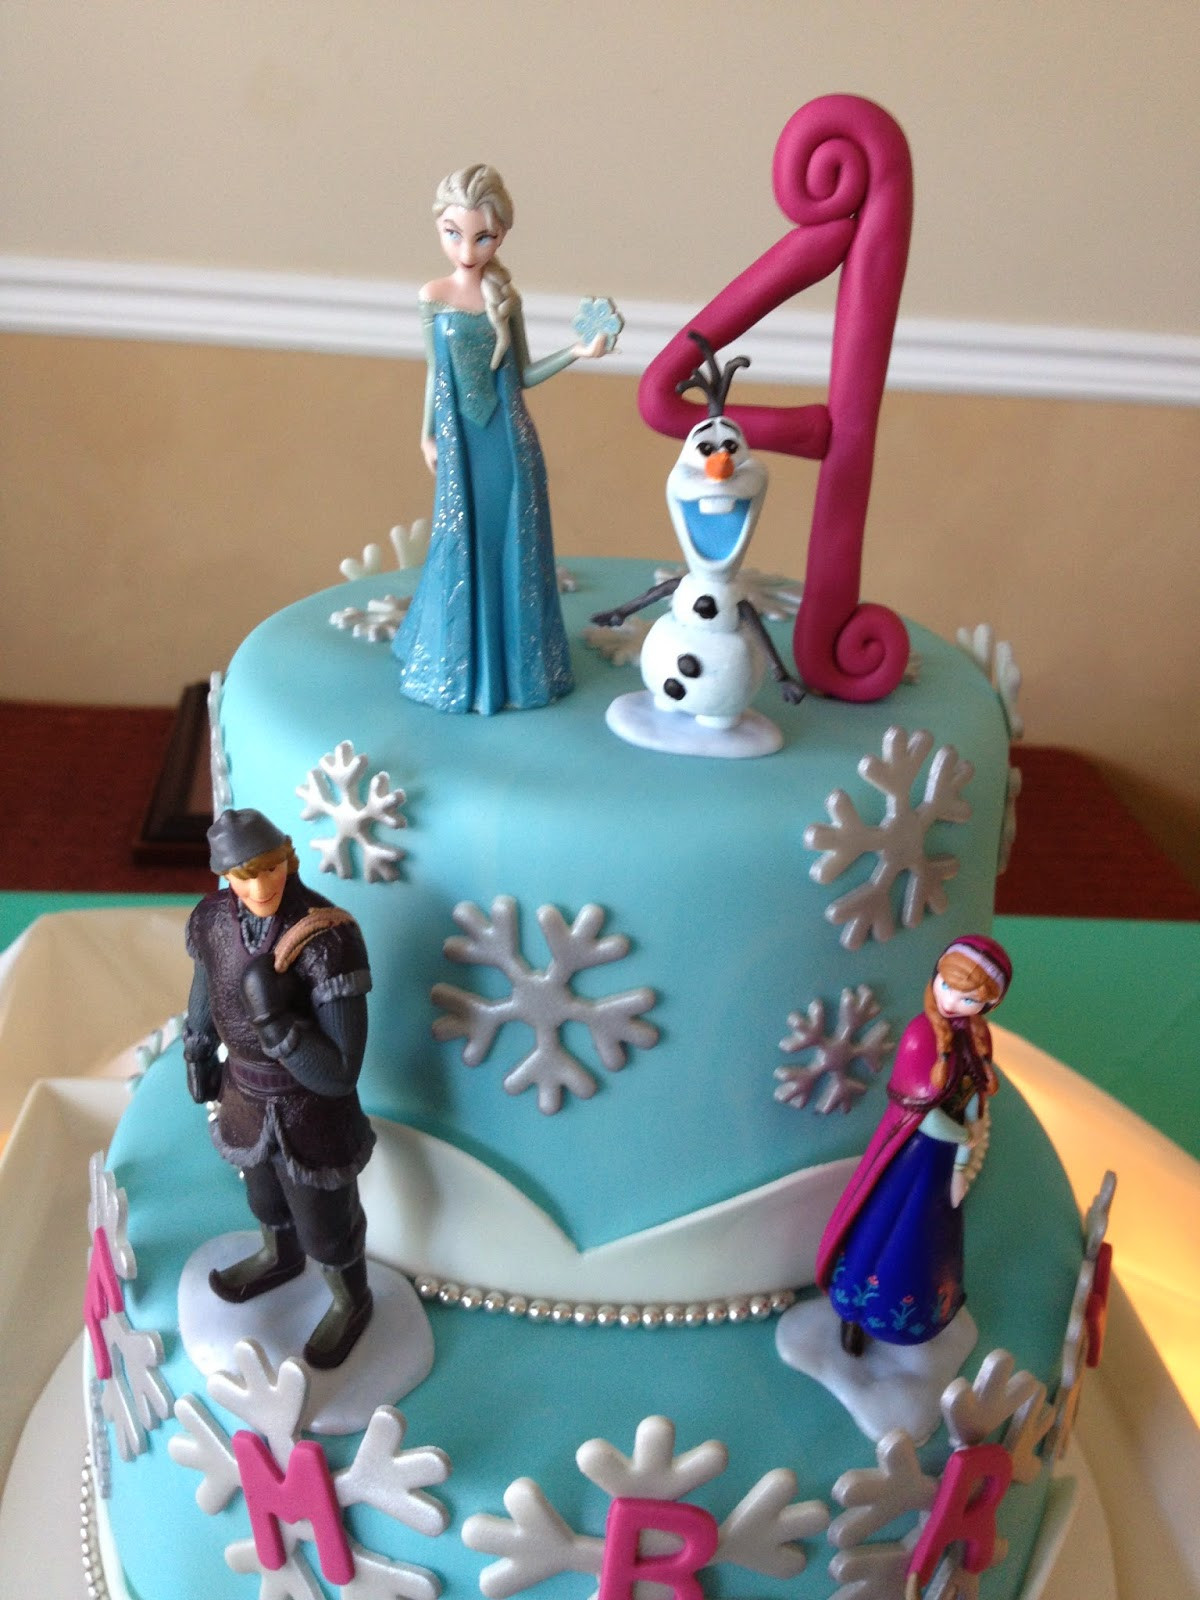 Best ideas about Frozen Birthday Cake
. Save or Pin Sugar Love Cake Design Frozen Birthday Cake Now.